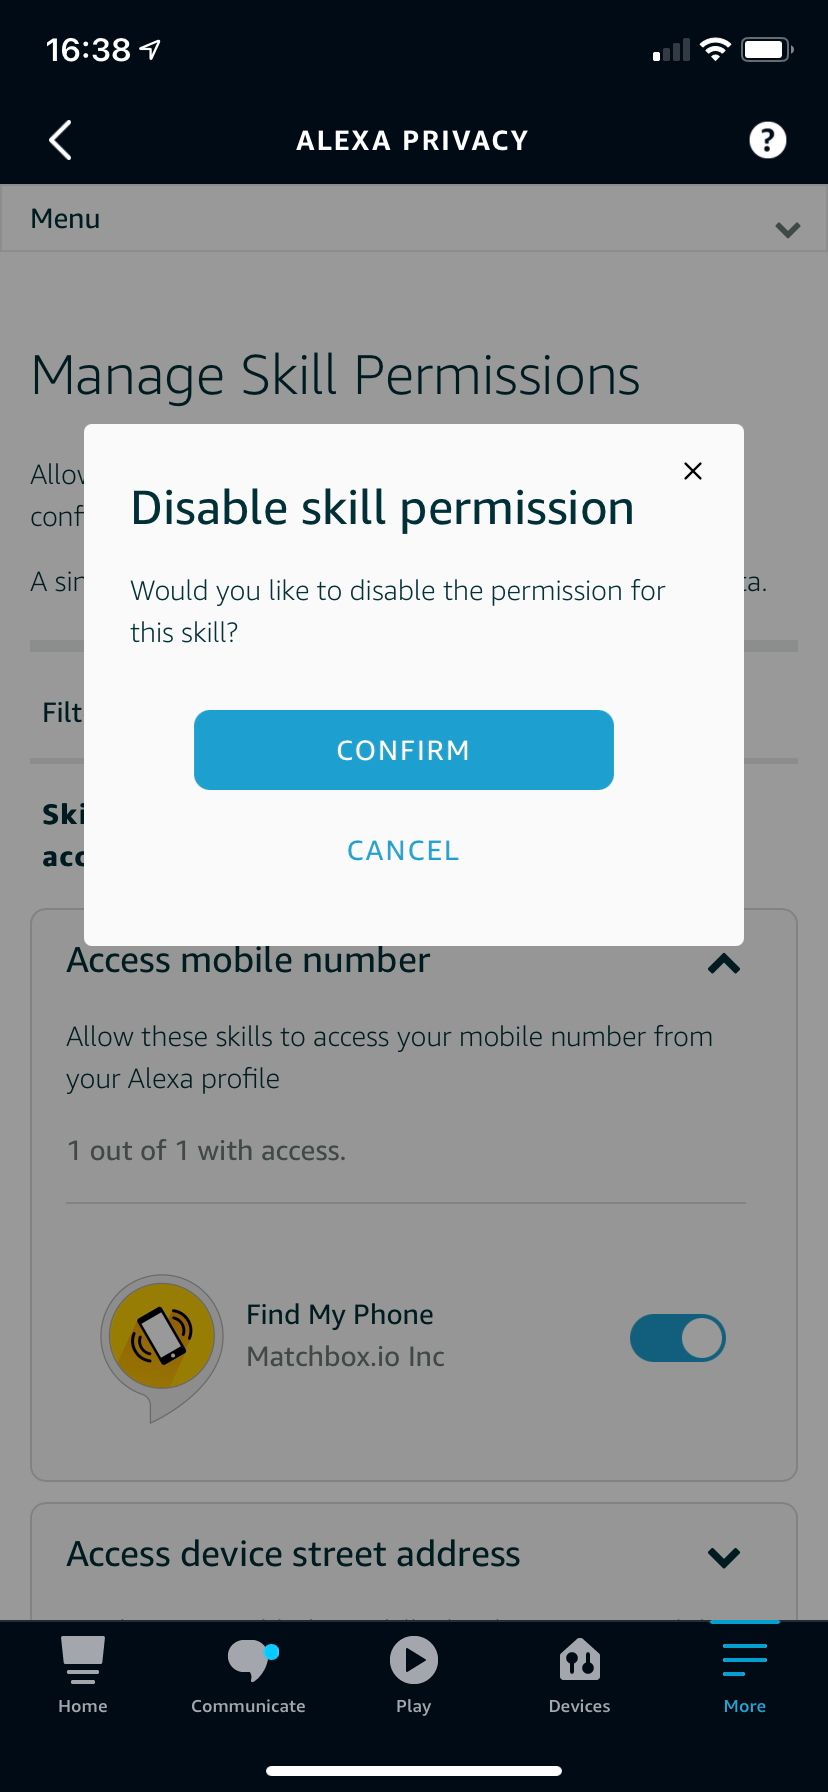 Alexa popup confirming removing skill permission